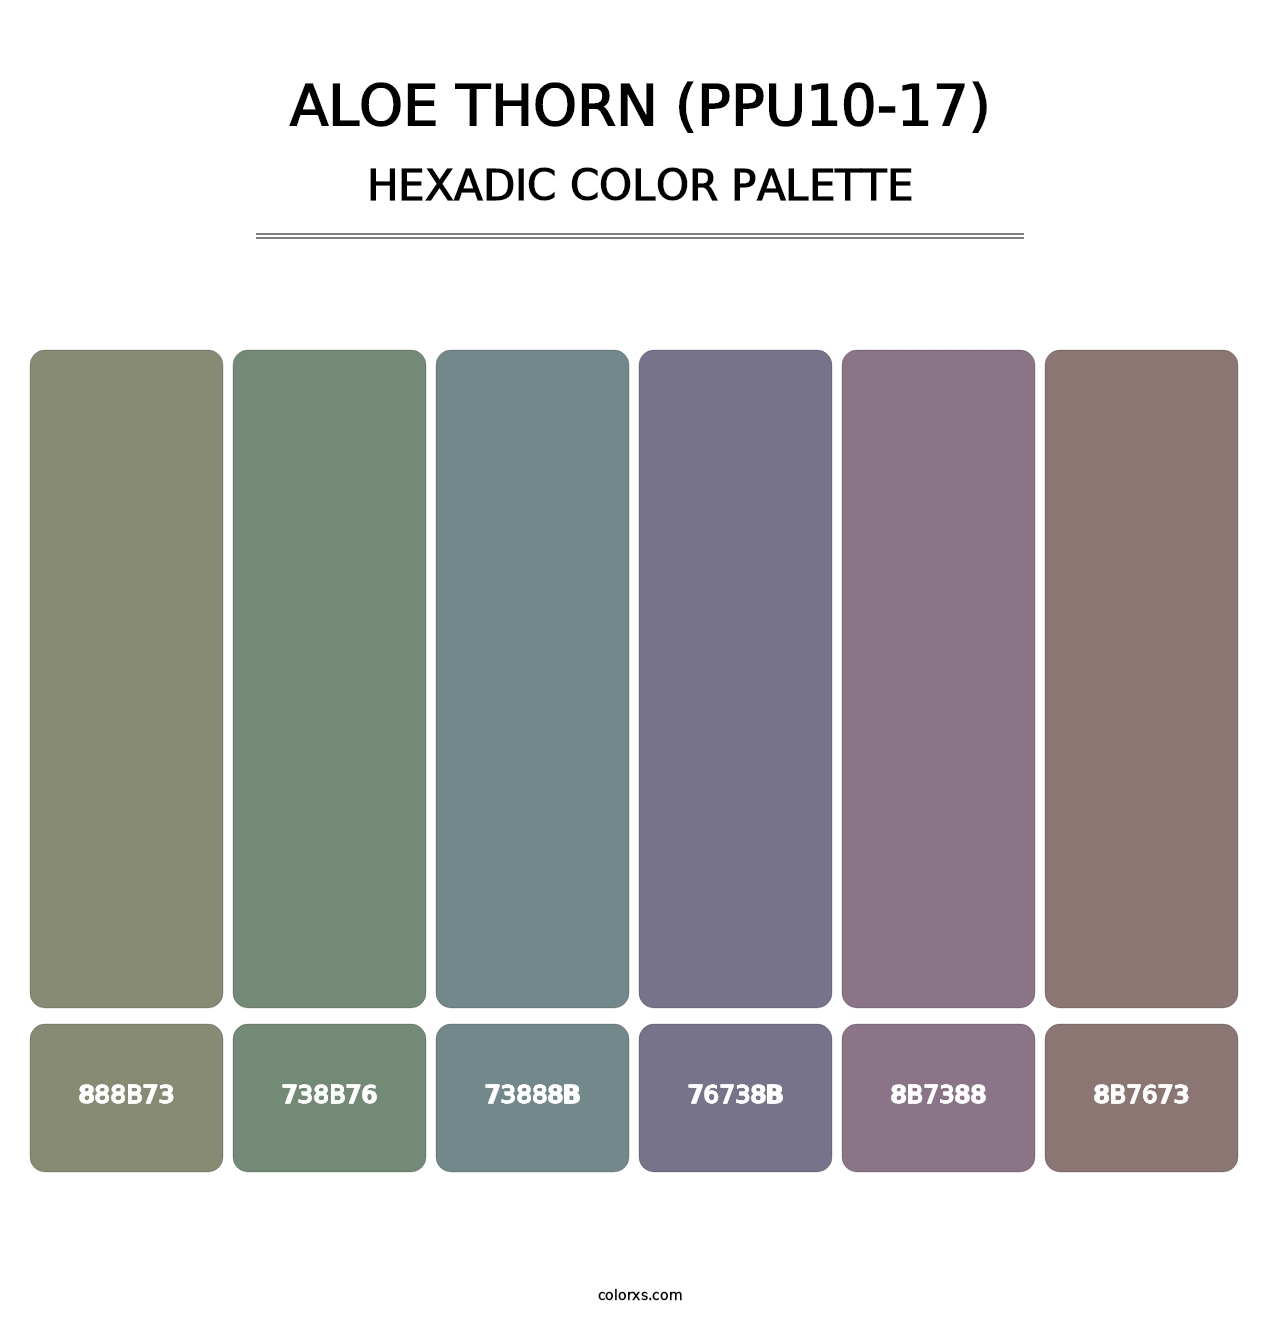 Aloe Thorn (PPU10-17) - Hexadic Color Palette